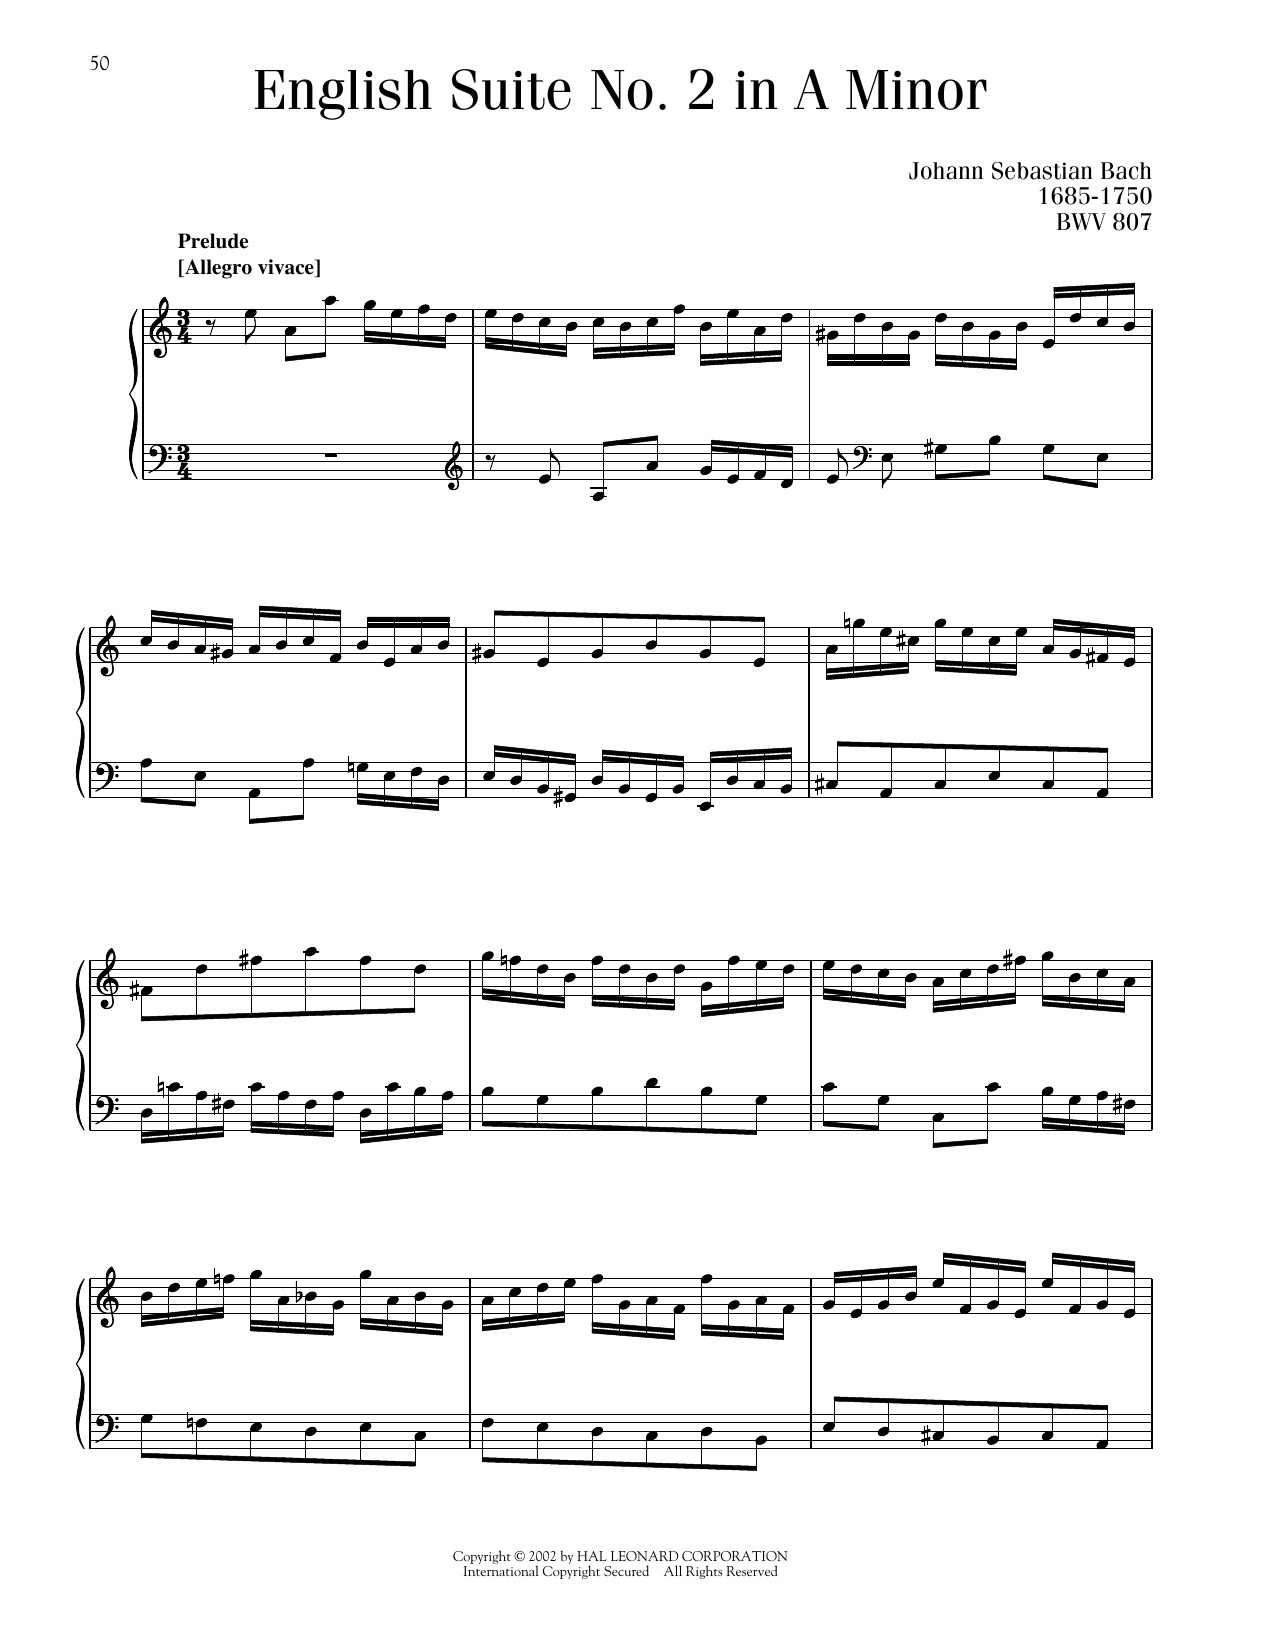 Johann Sebastian Bach English Suite No. 2, BWV 807 Sheet Music Notes & Chords for Piano Solo - Download or Print PDF